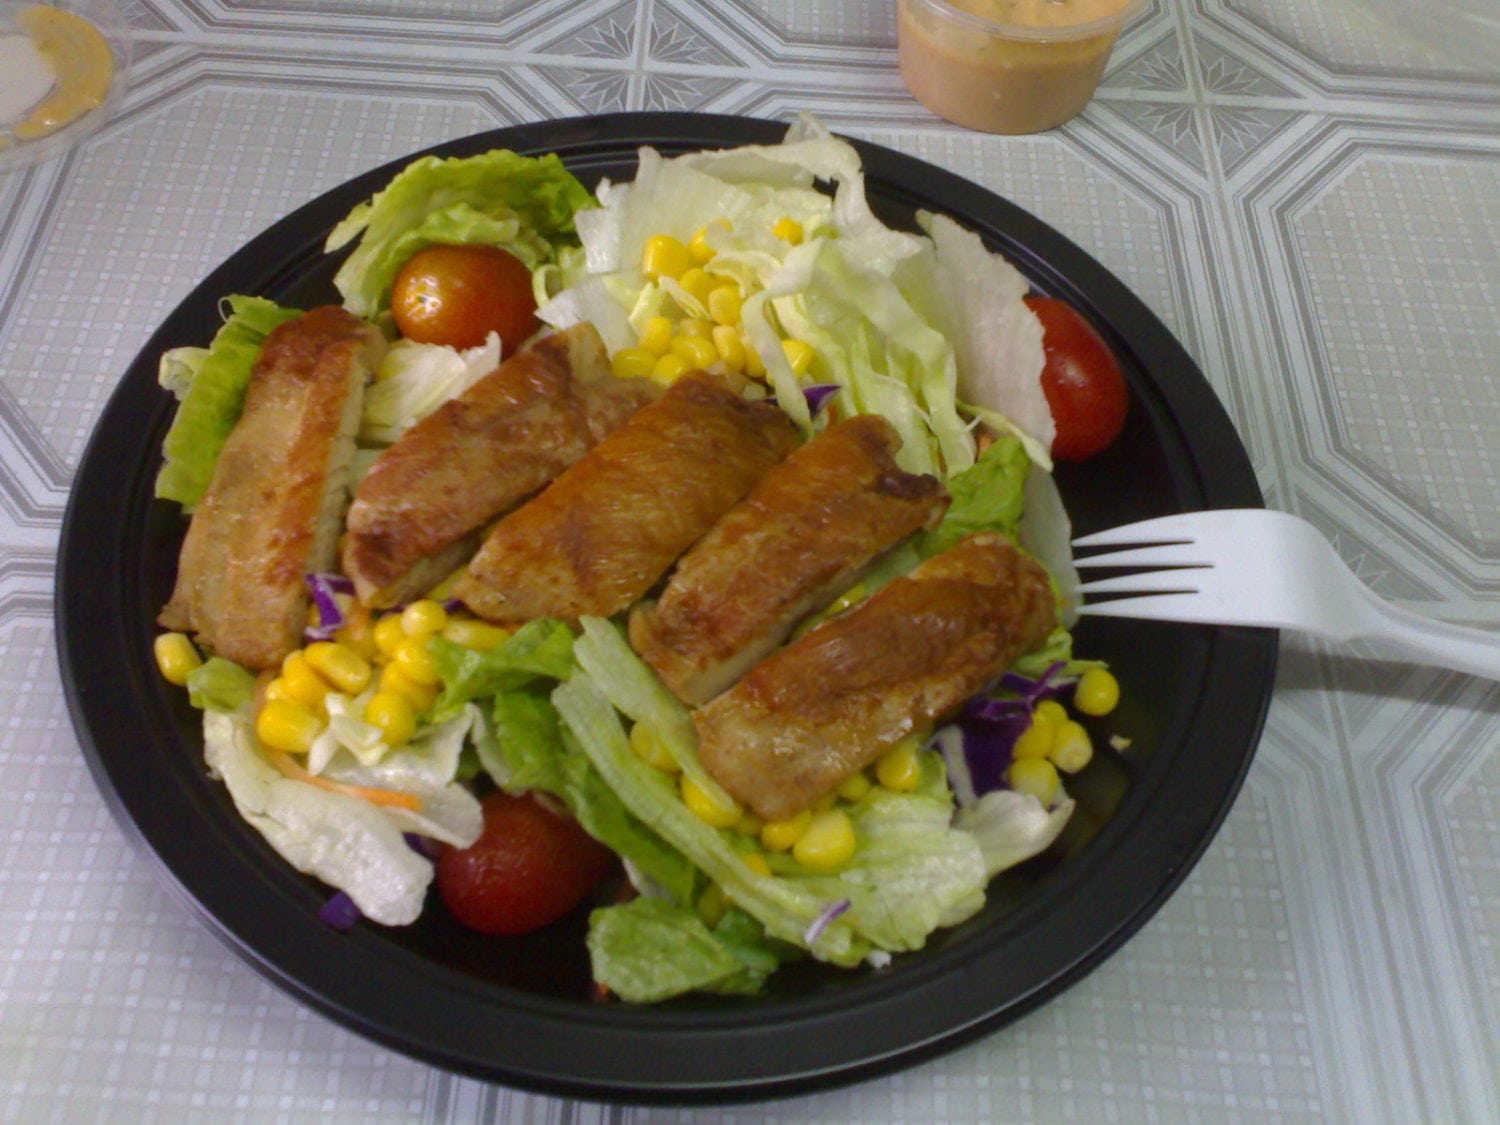 mcdonalds salad photo